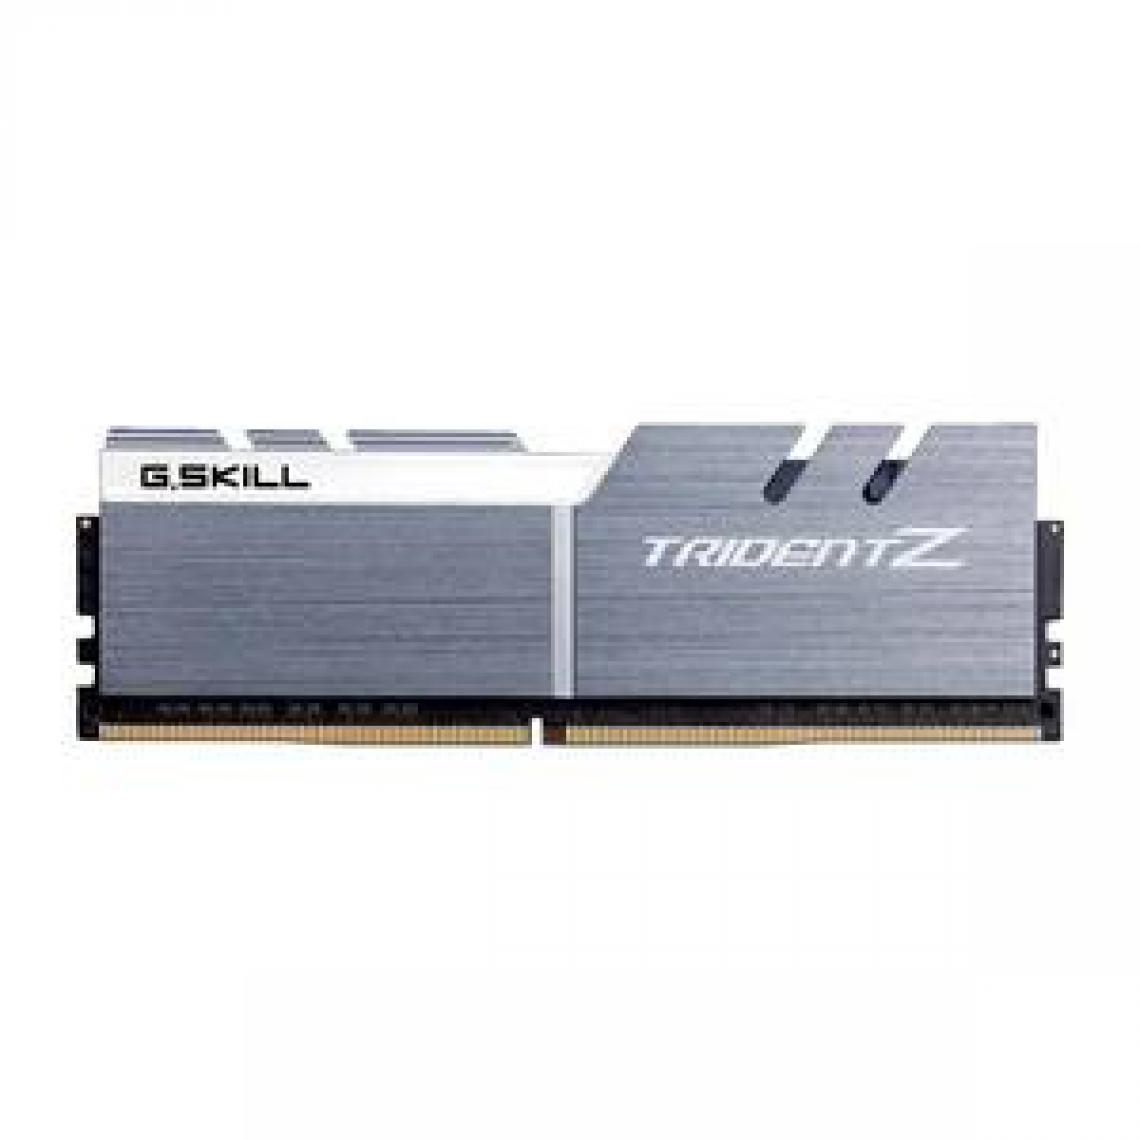 Gskill - Trident Z 16 Go (2x 8 Go) DDR4 3200 MHz CL14 Blanc et argent - RAM PC Fixe